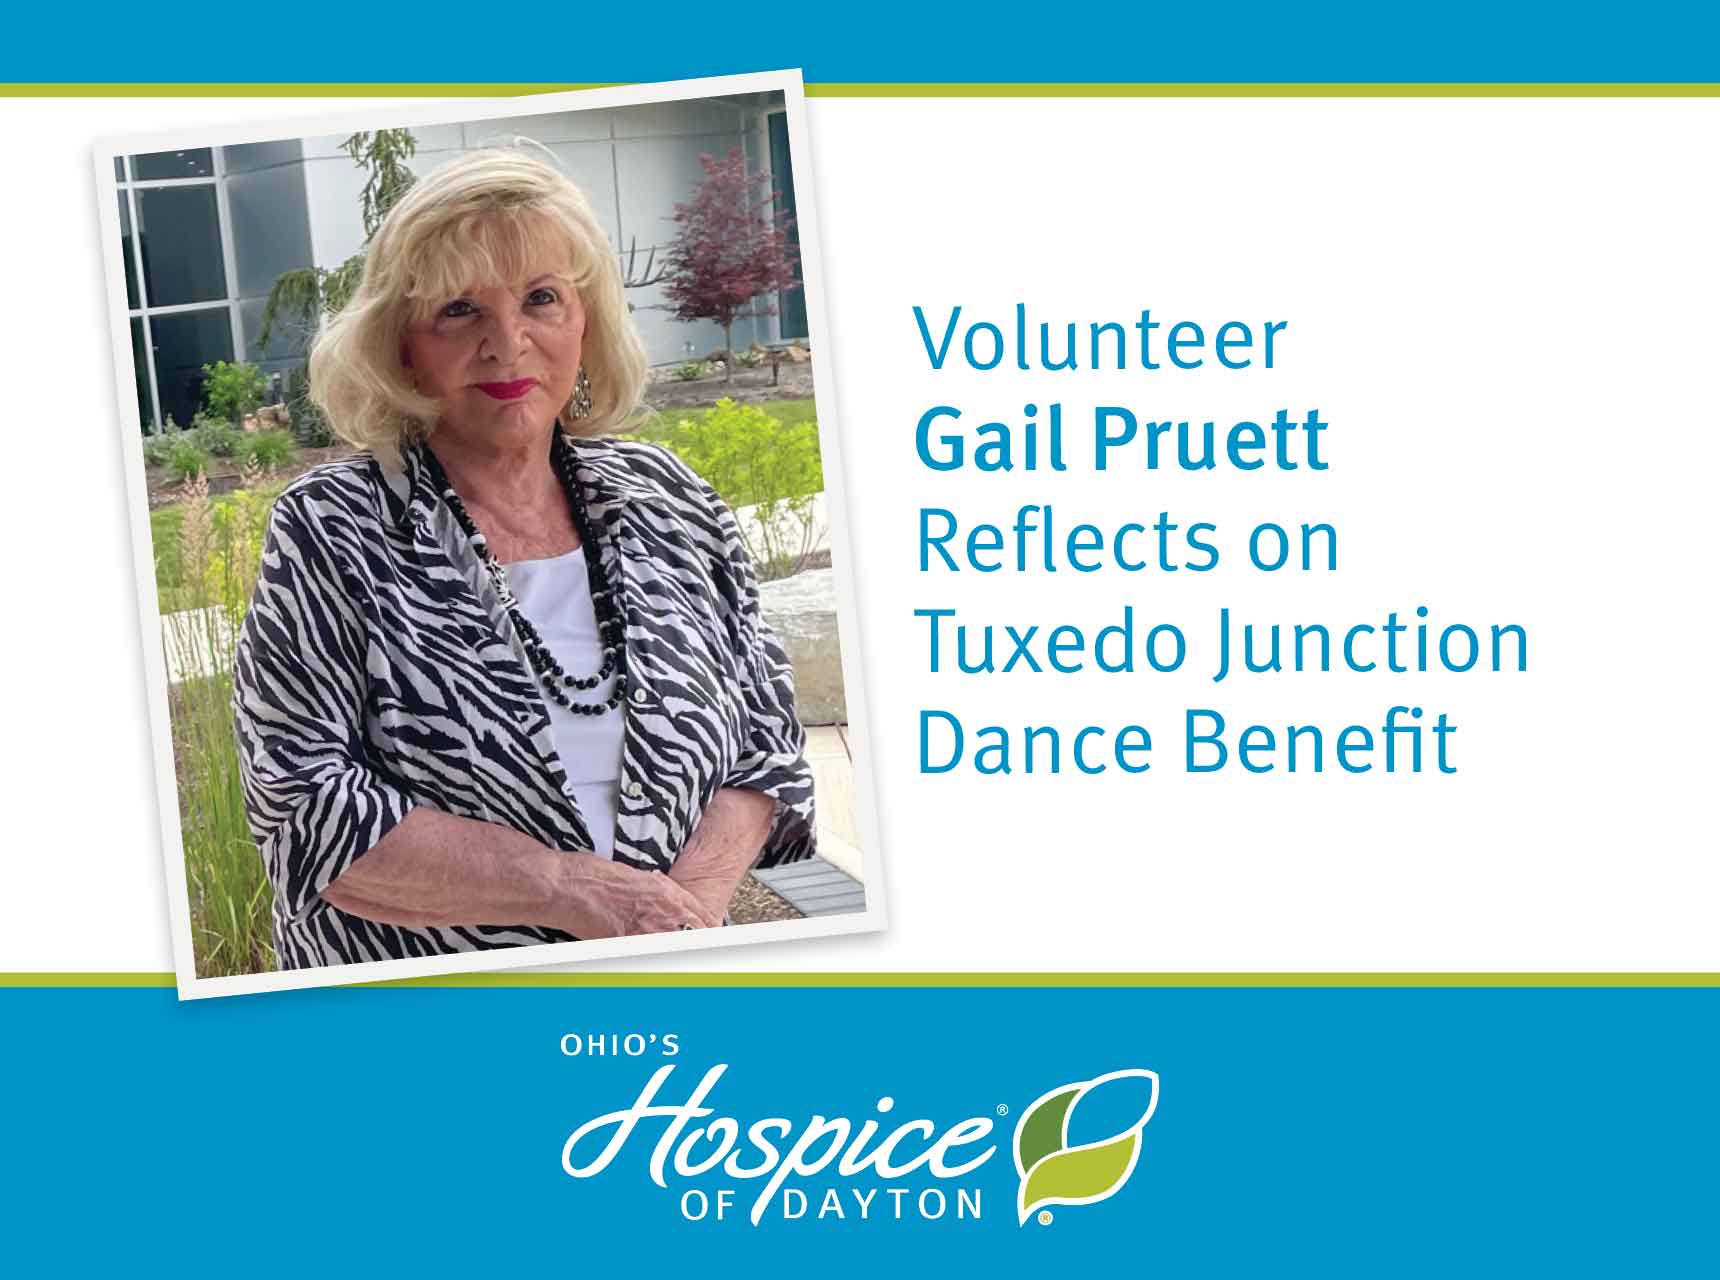 Volunteer Gail Pruett Reflects on Tuxedo Junction Dance Benefit